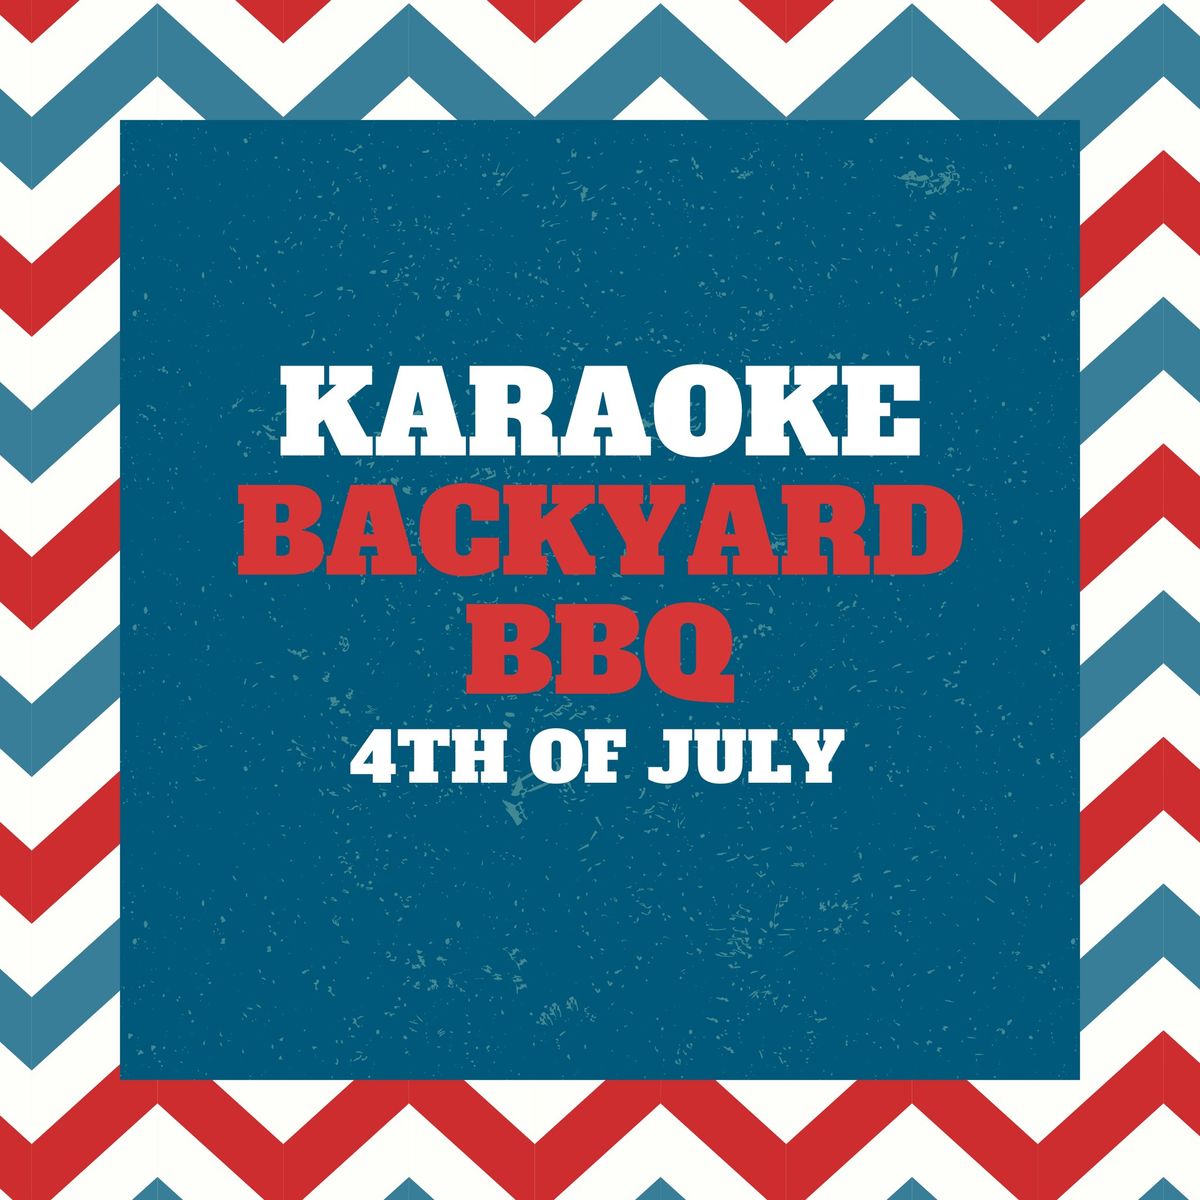 Karaoke Backyard BBQ for July 4th!